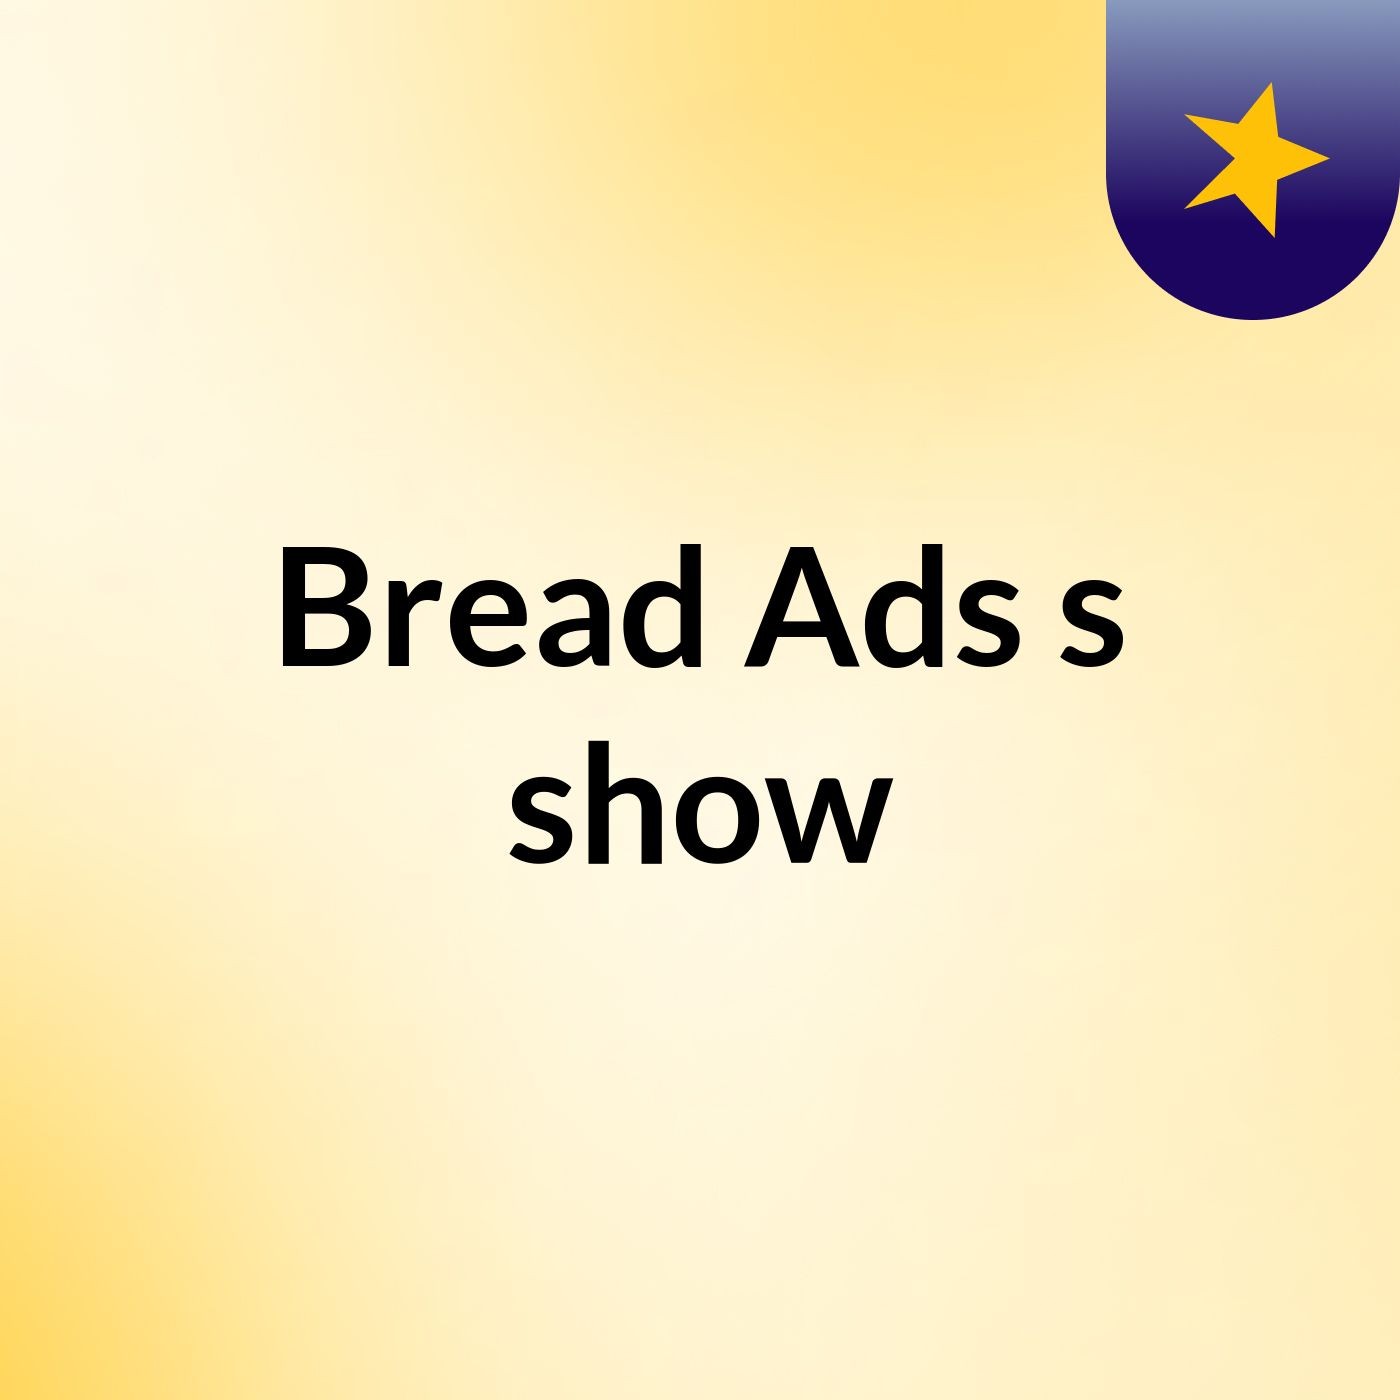 Bread Ads's show